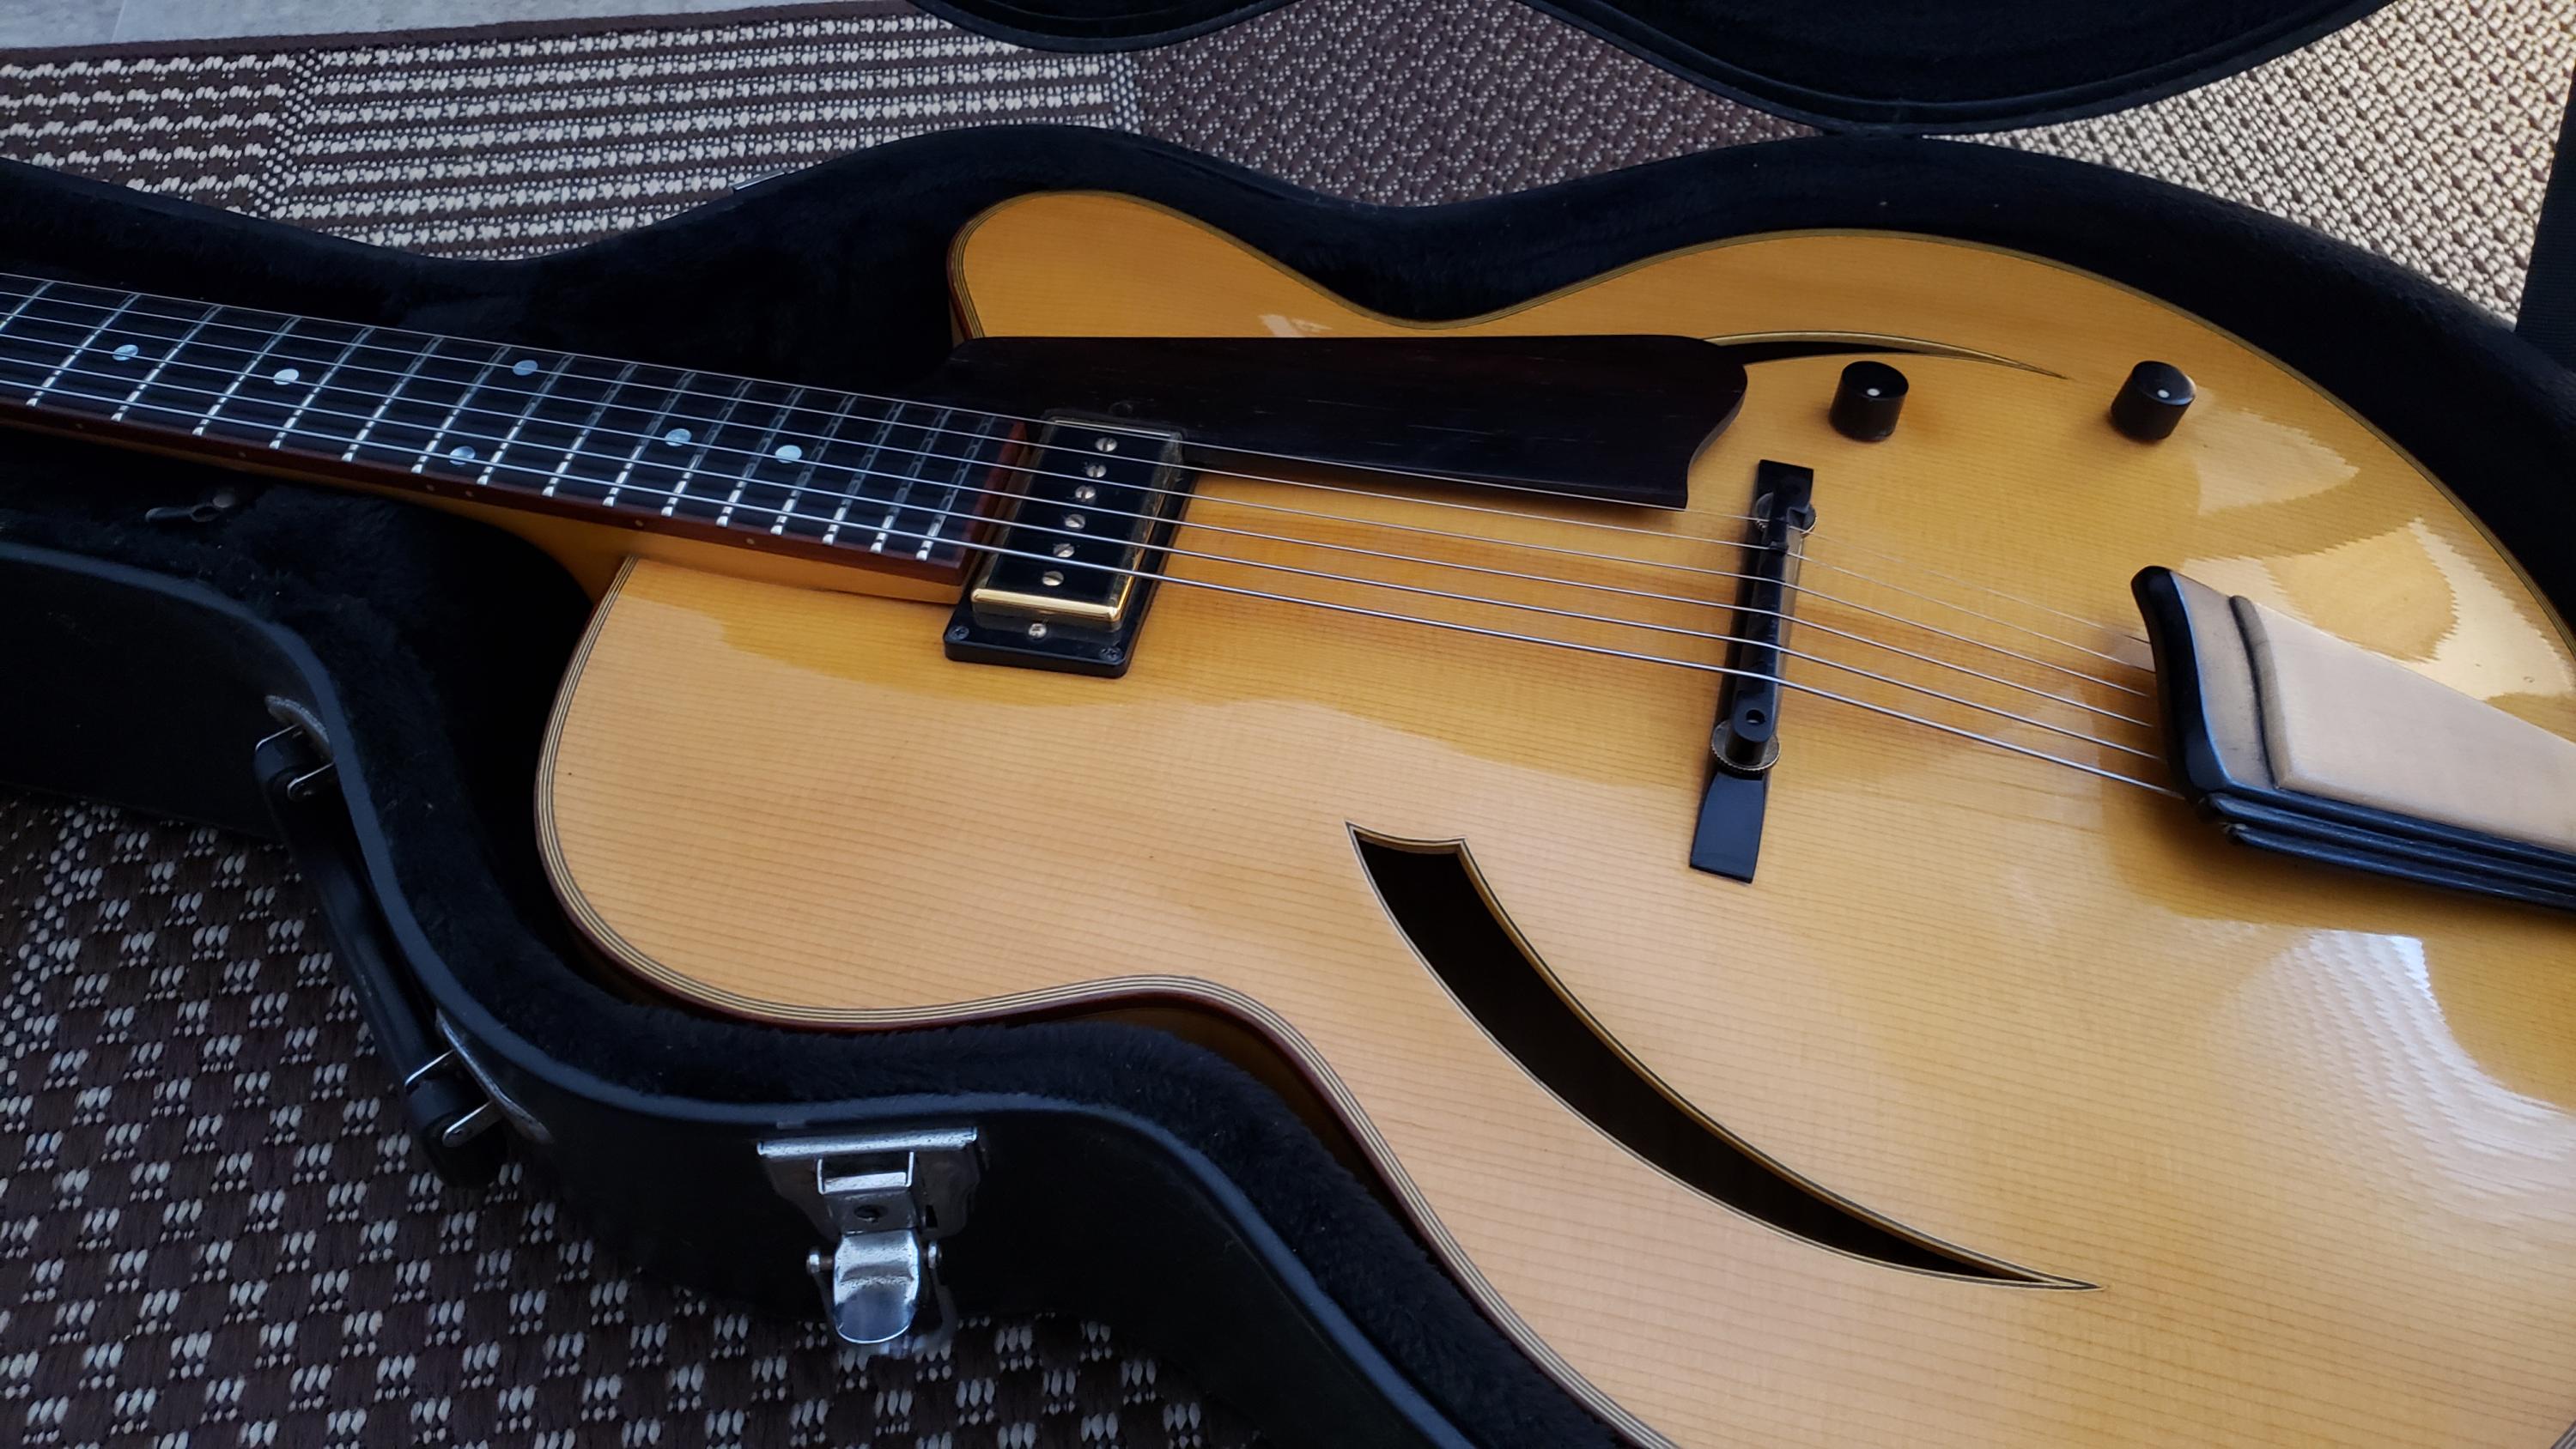 New (used) guitar: Yunzhi archtop-20230115_123051-jpg